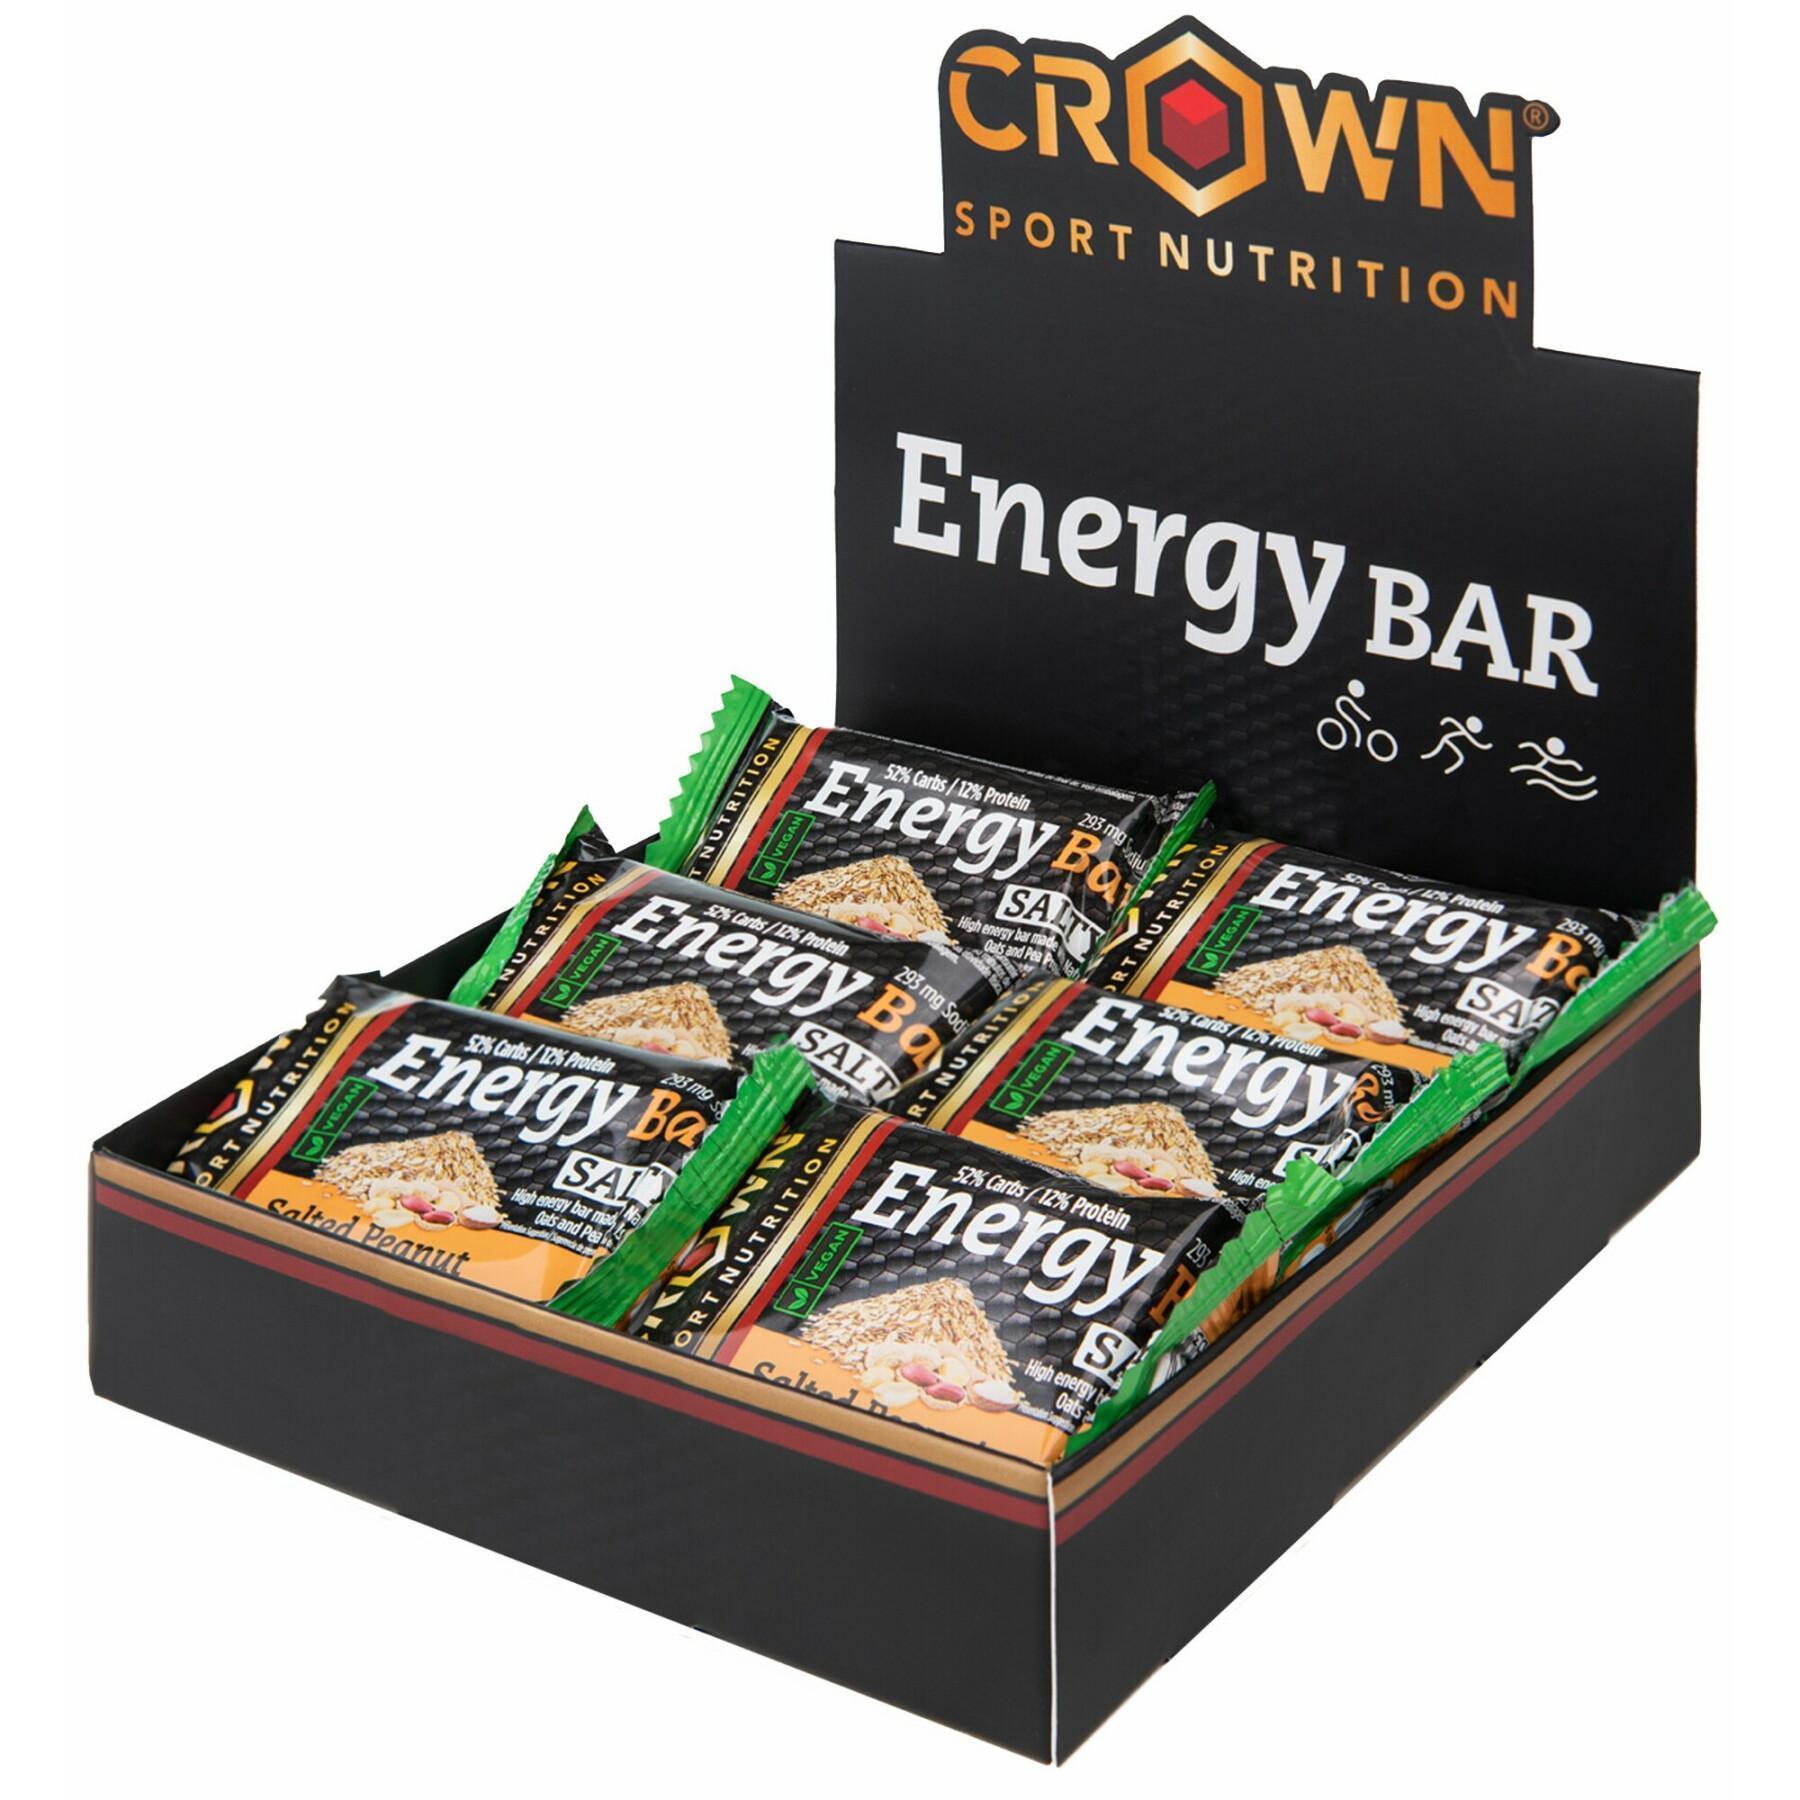 Veganer Ernährungsriegel Crown Sport Nutrition Energy - arachides salées - 60 g